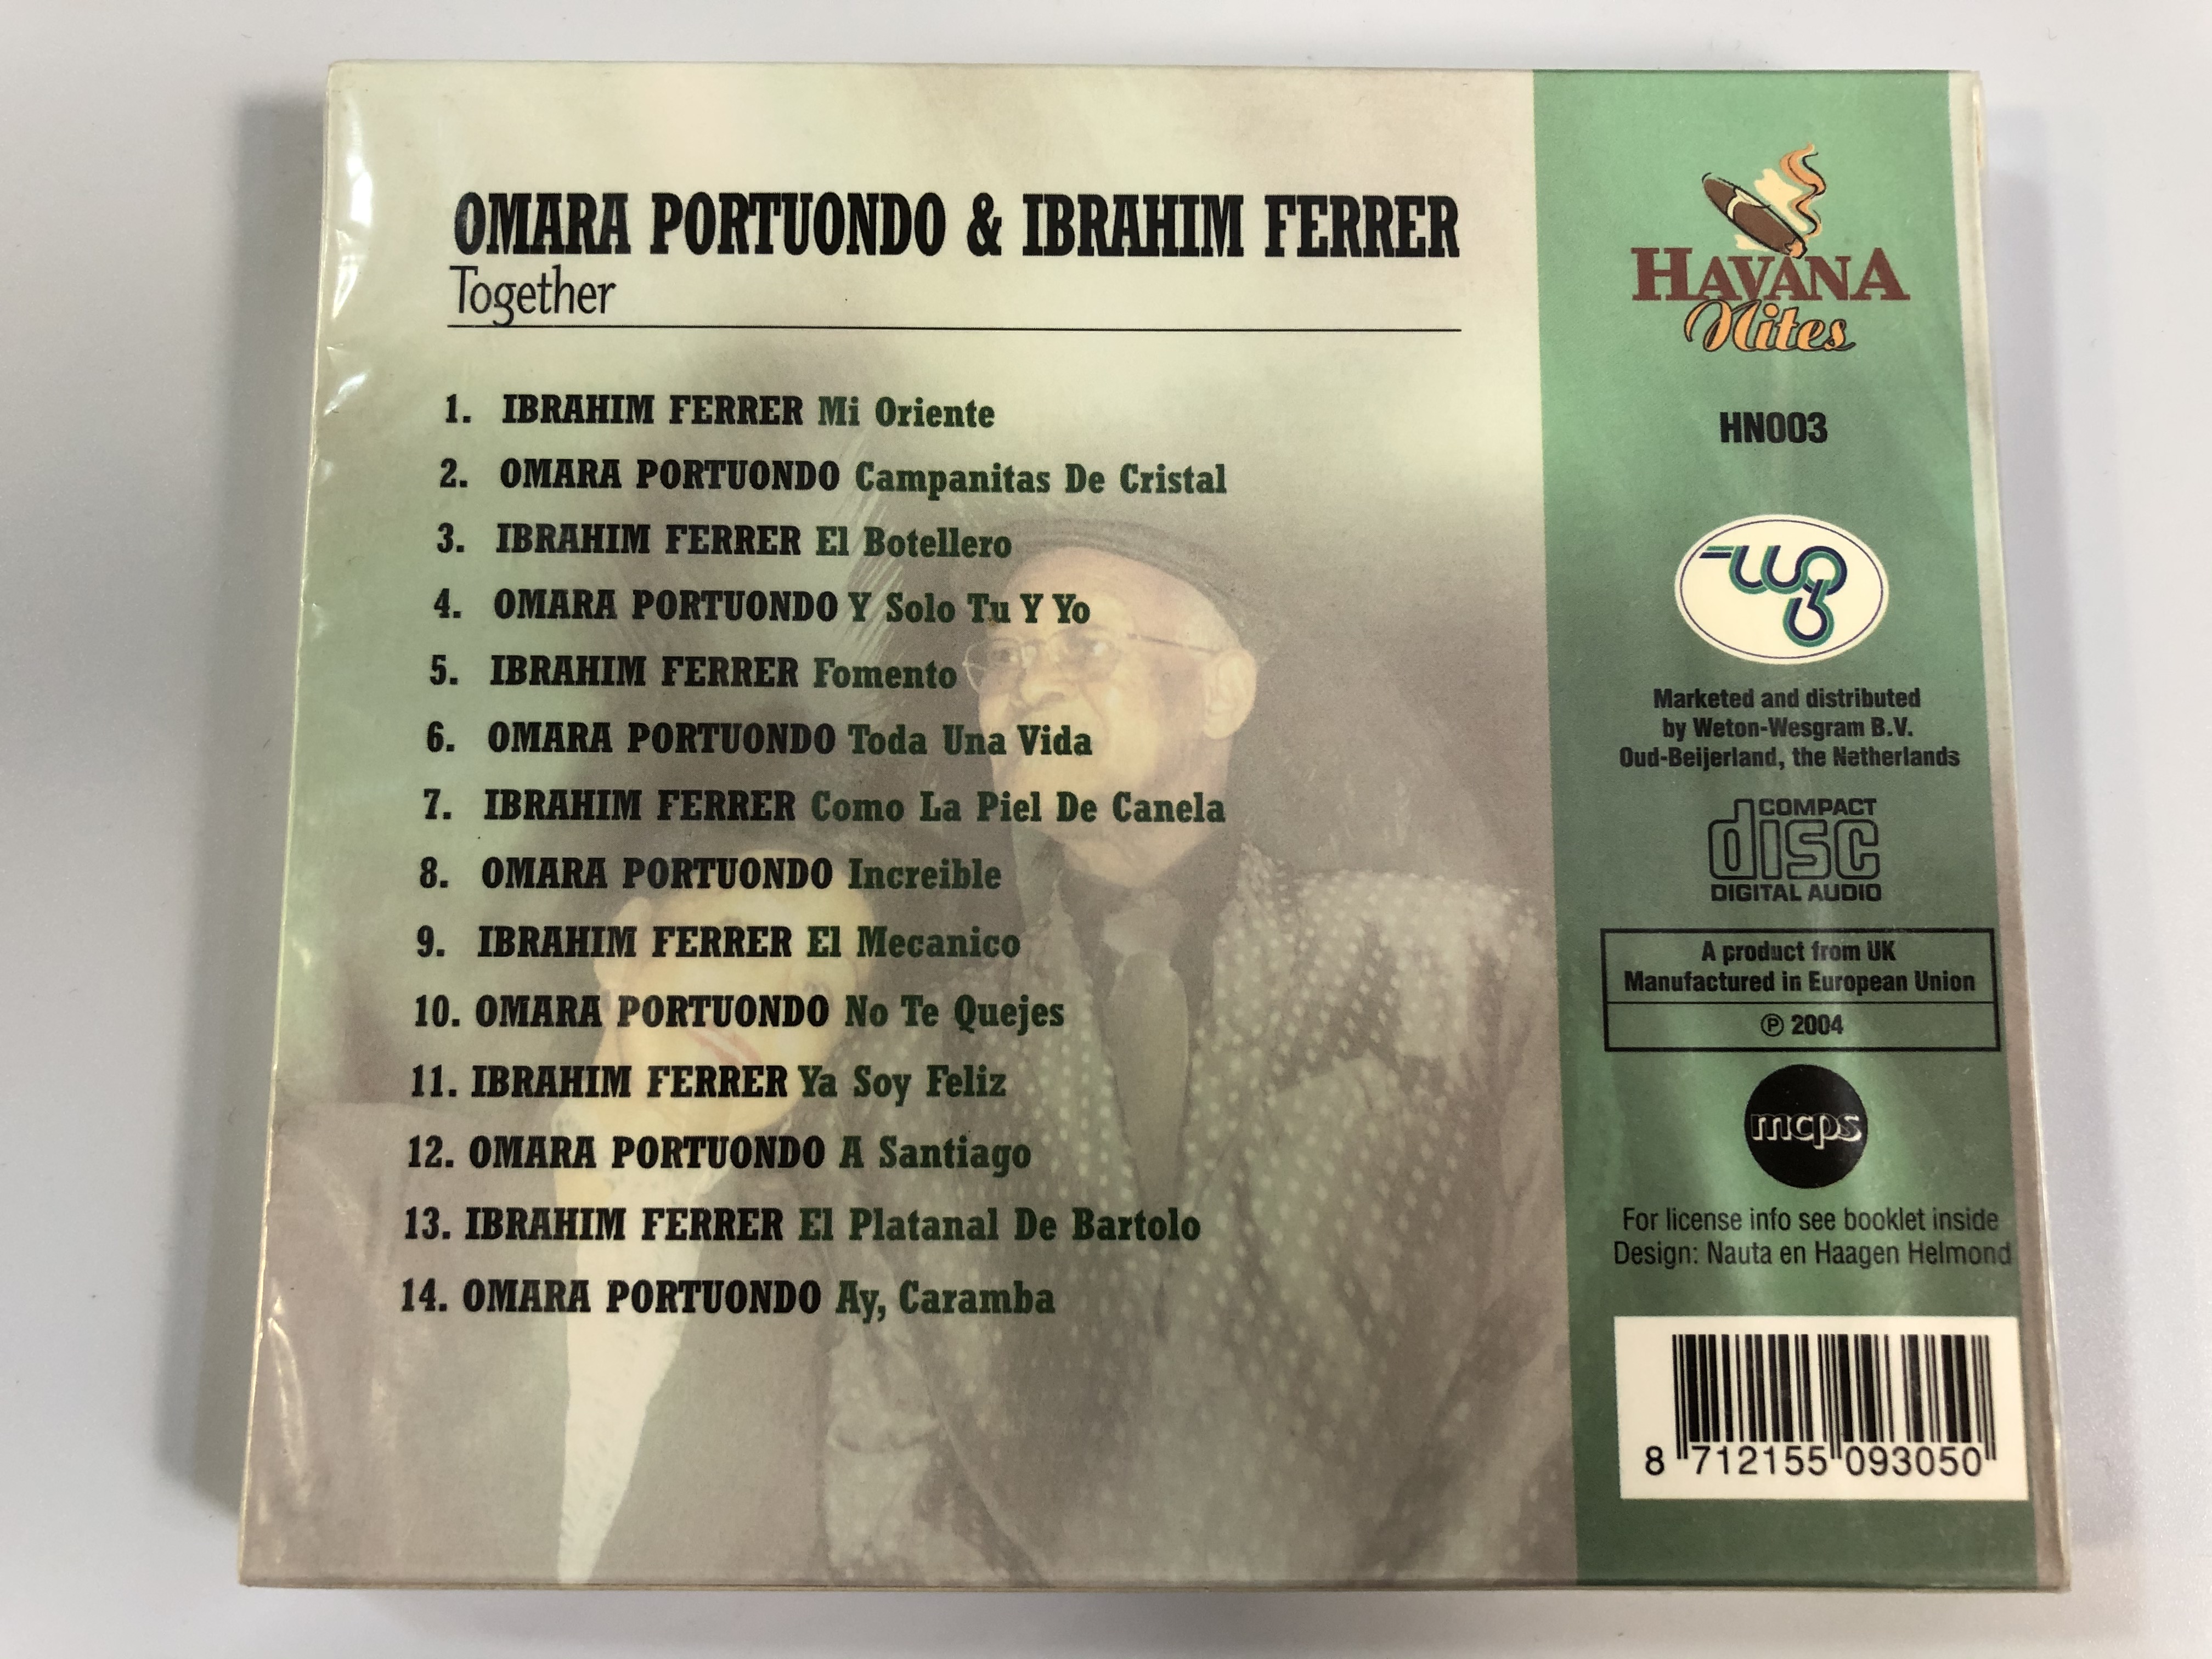 omara-portuondo-ibrahim-ferrer-together-cuba-collection-havana-nites-audio-cd-2004-hn003-2-.jpg